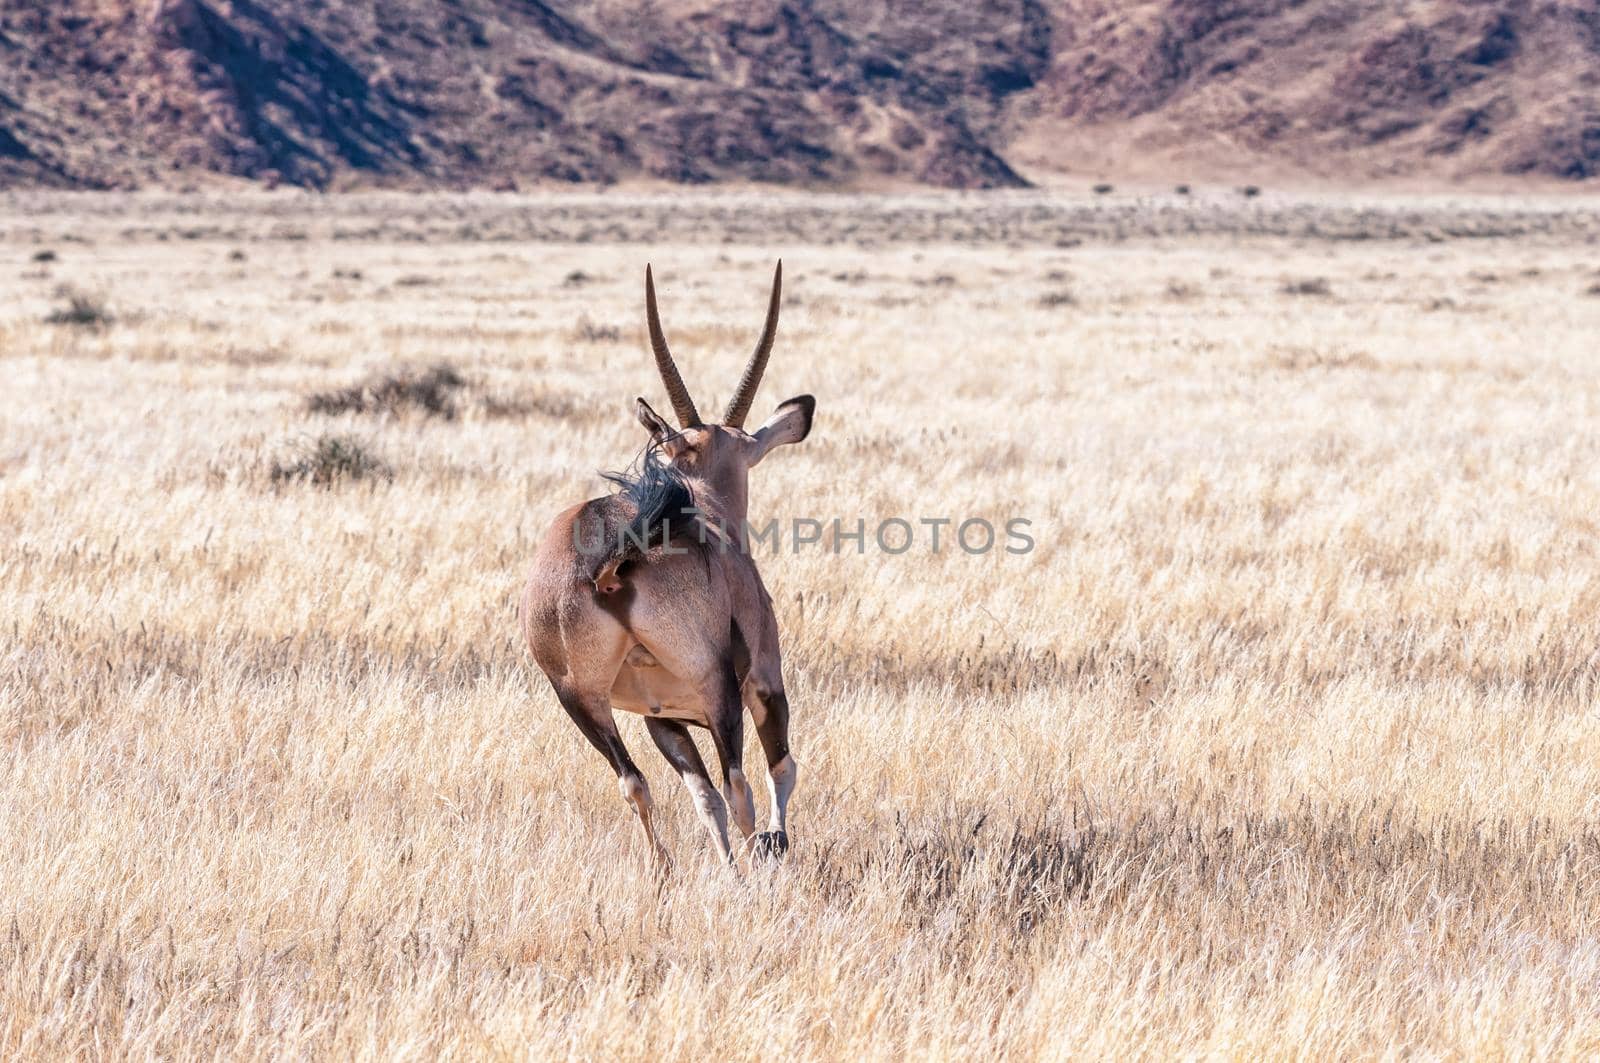 Oyx, also called gemsbok, running away from the camera by dpreezg